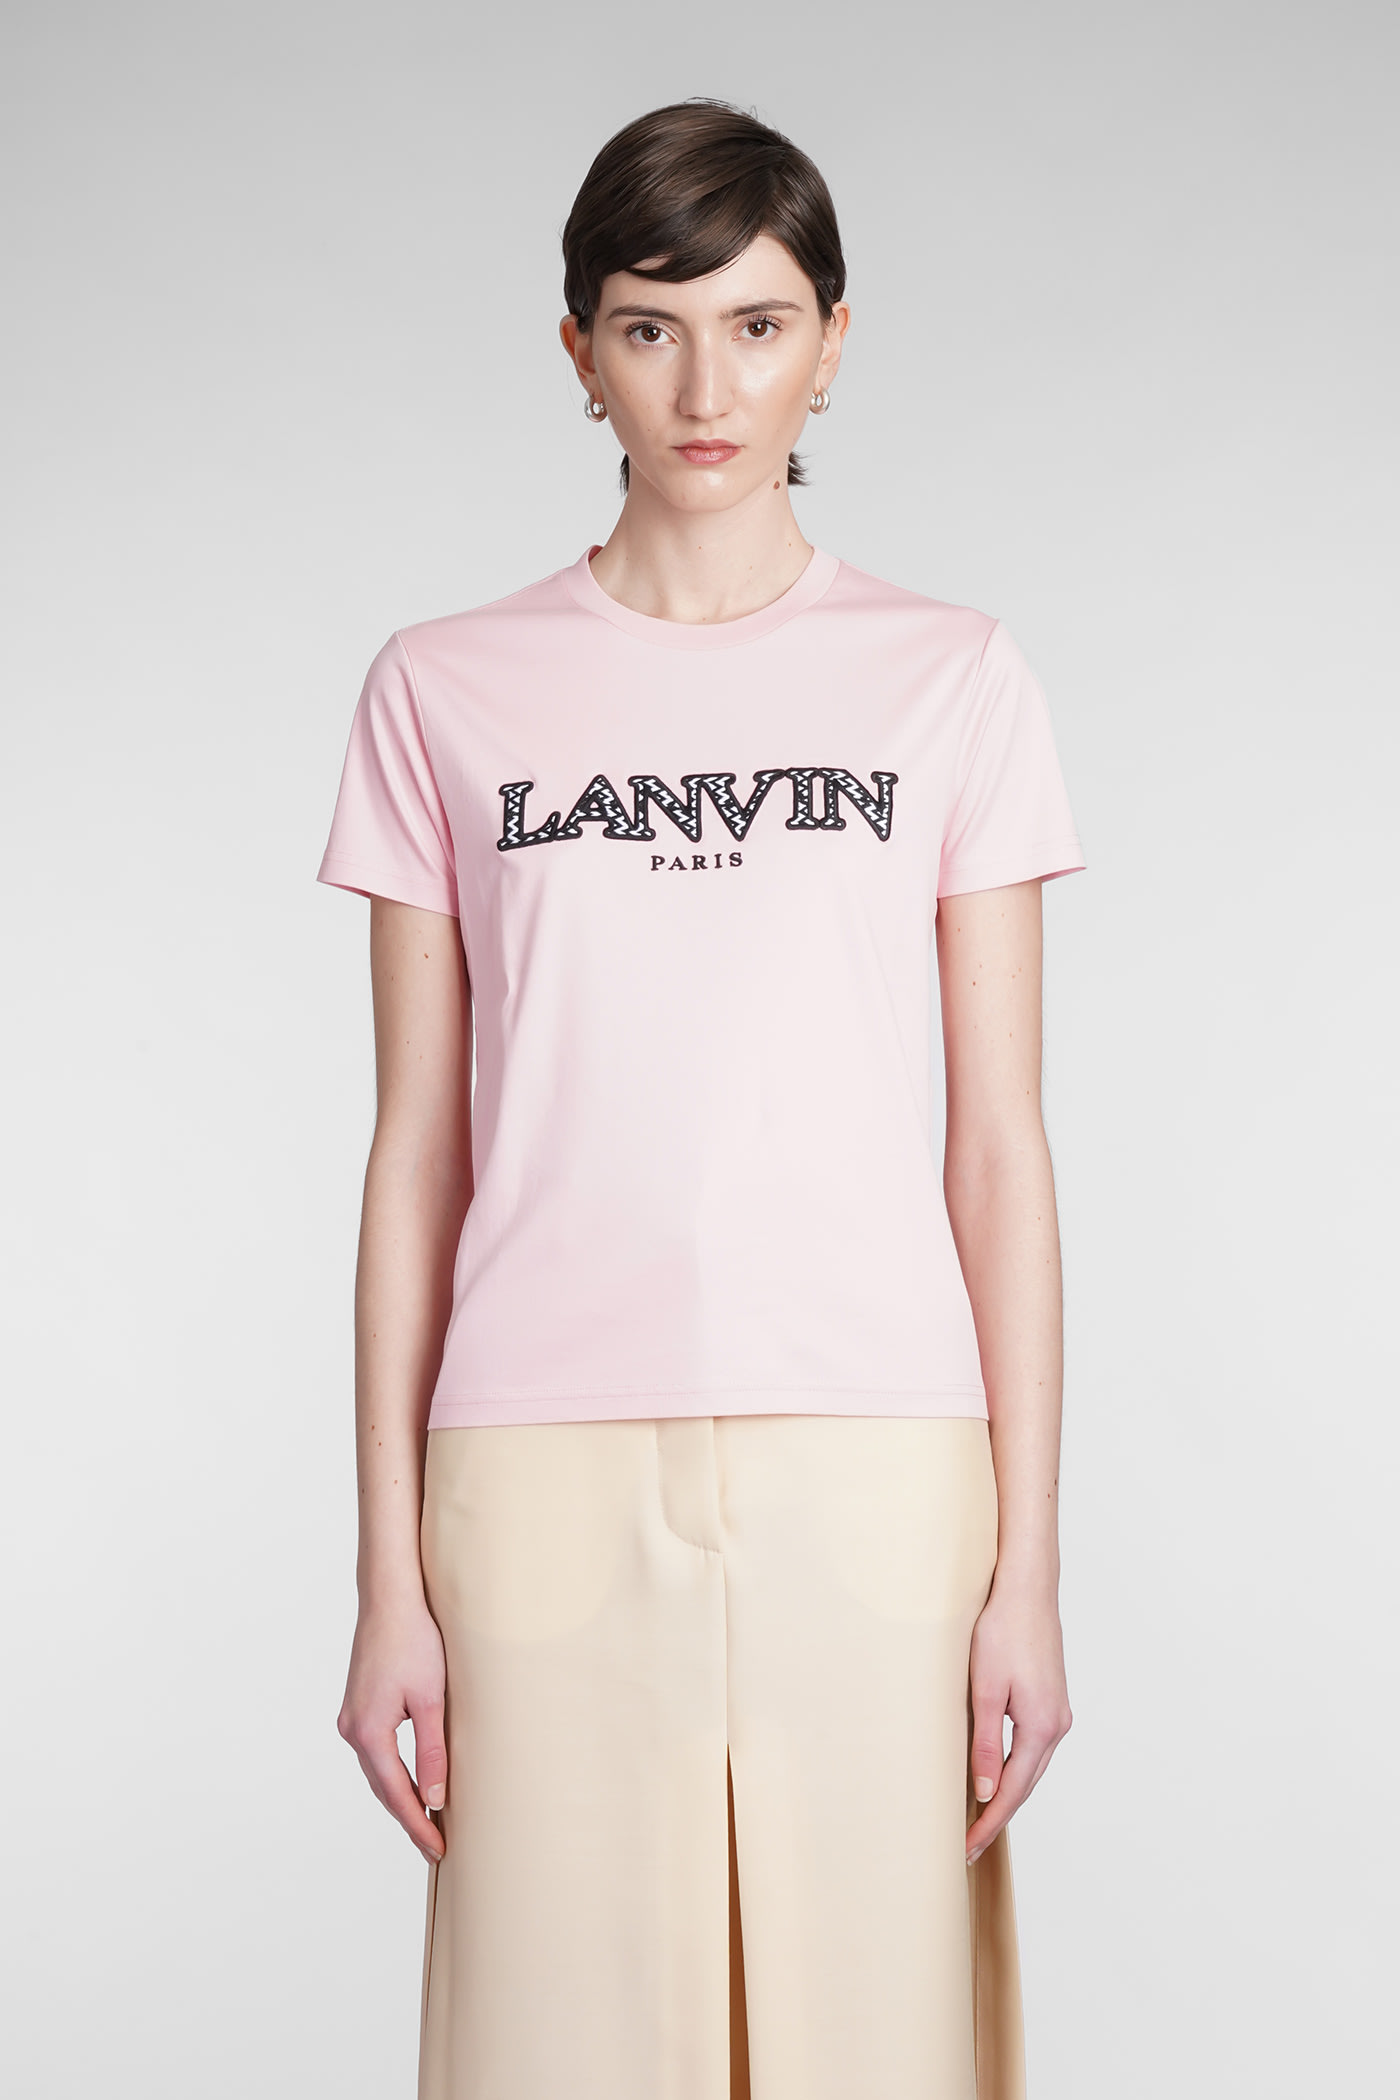 LANVIN T-SHIRT IN ROSE-PINK COTTON